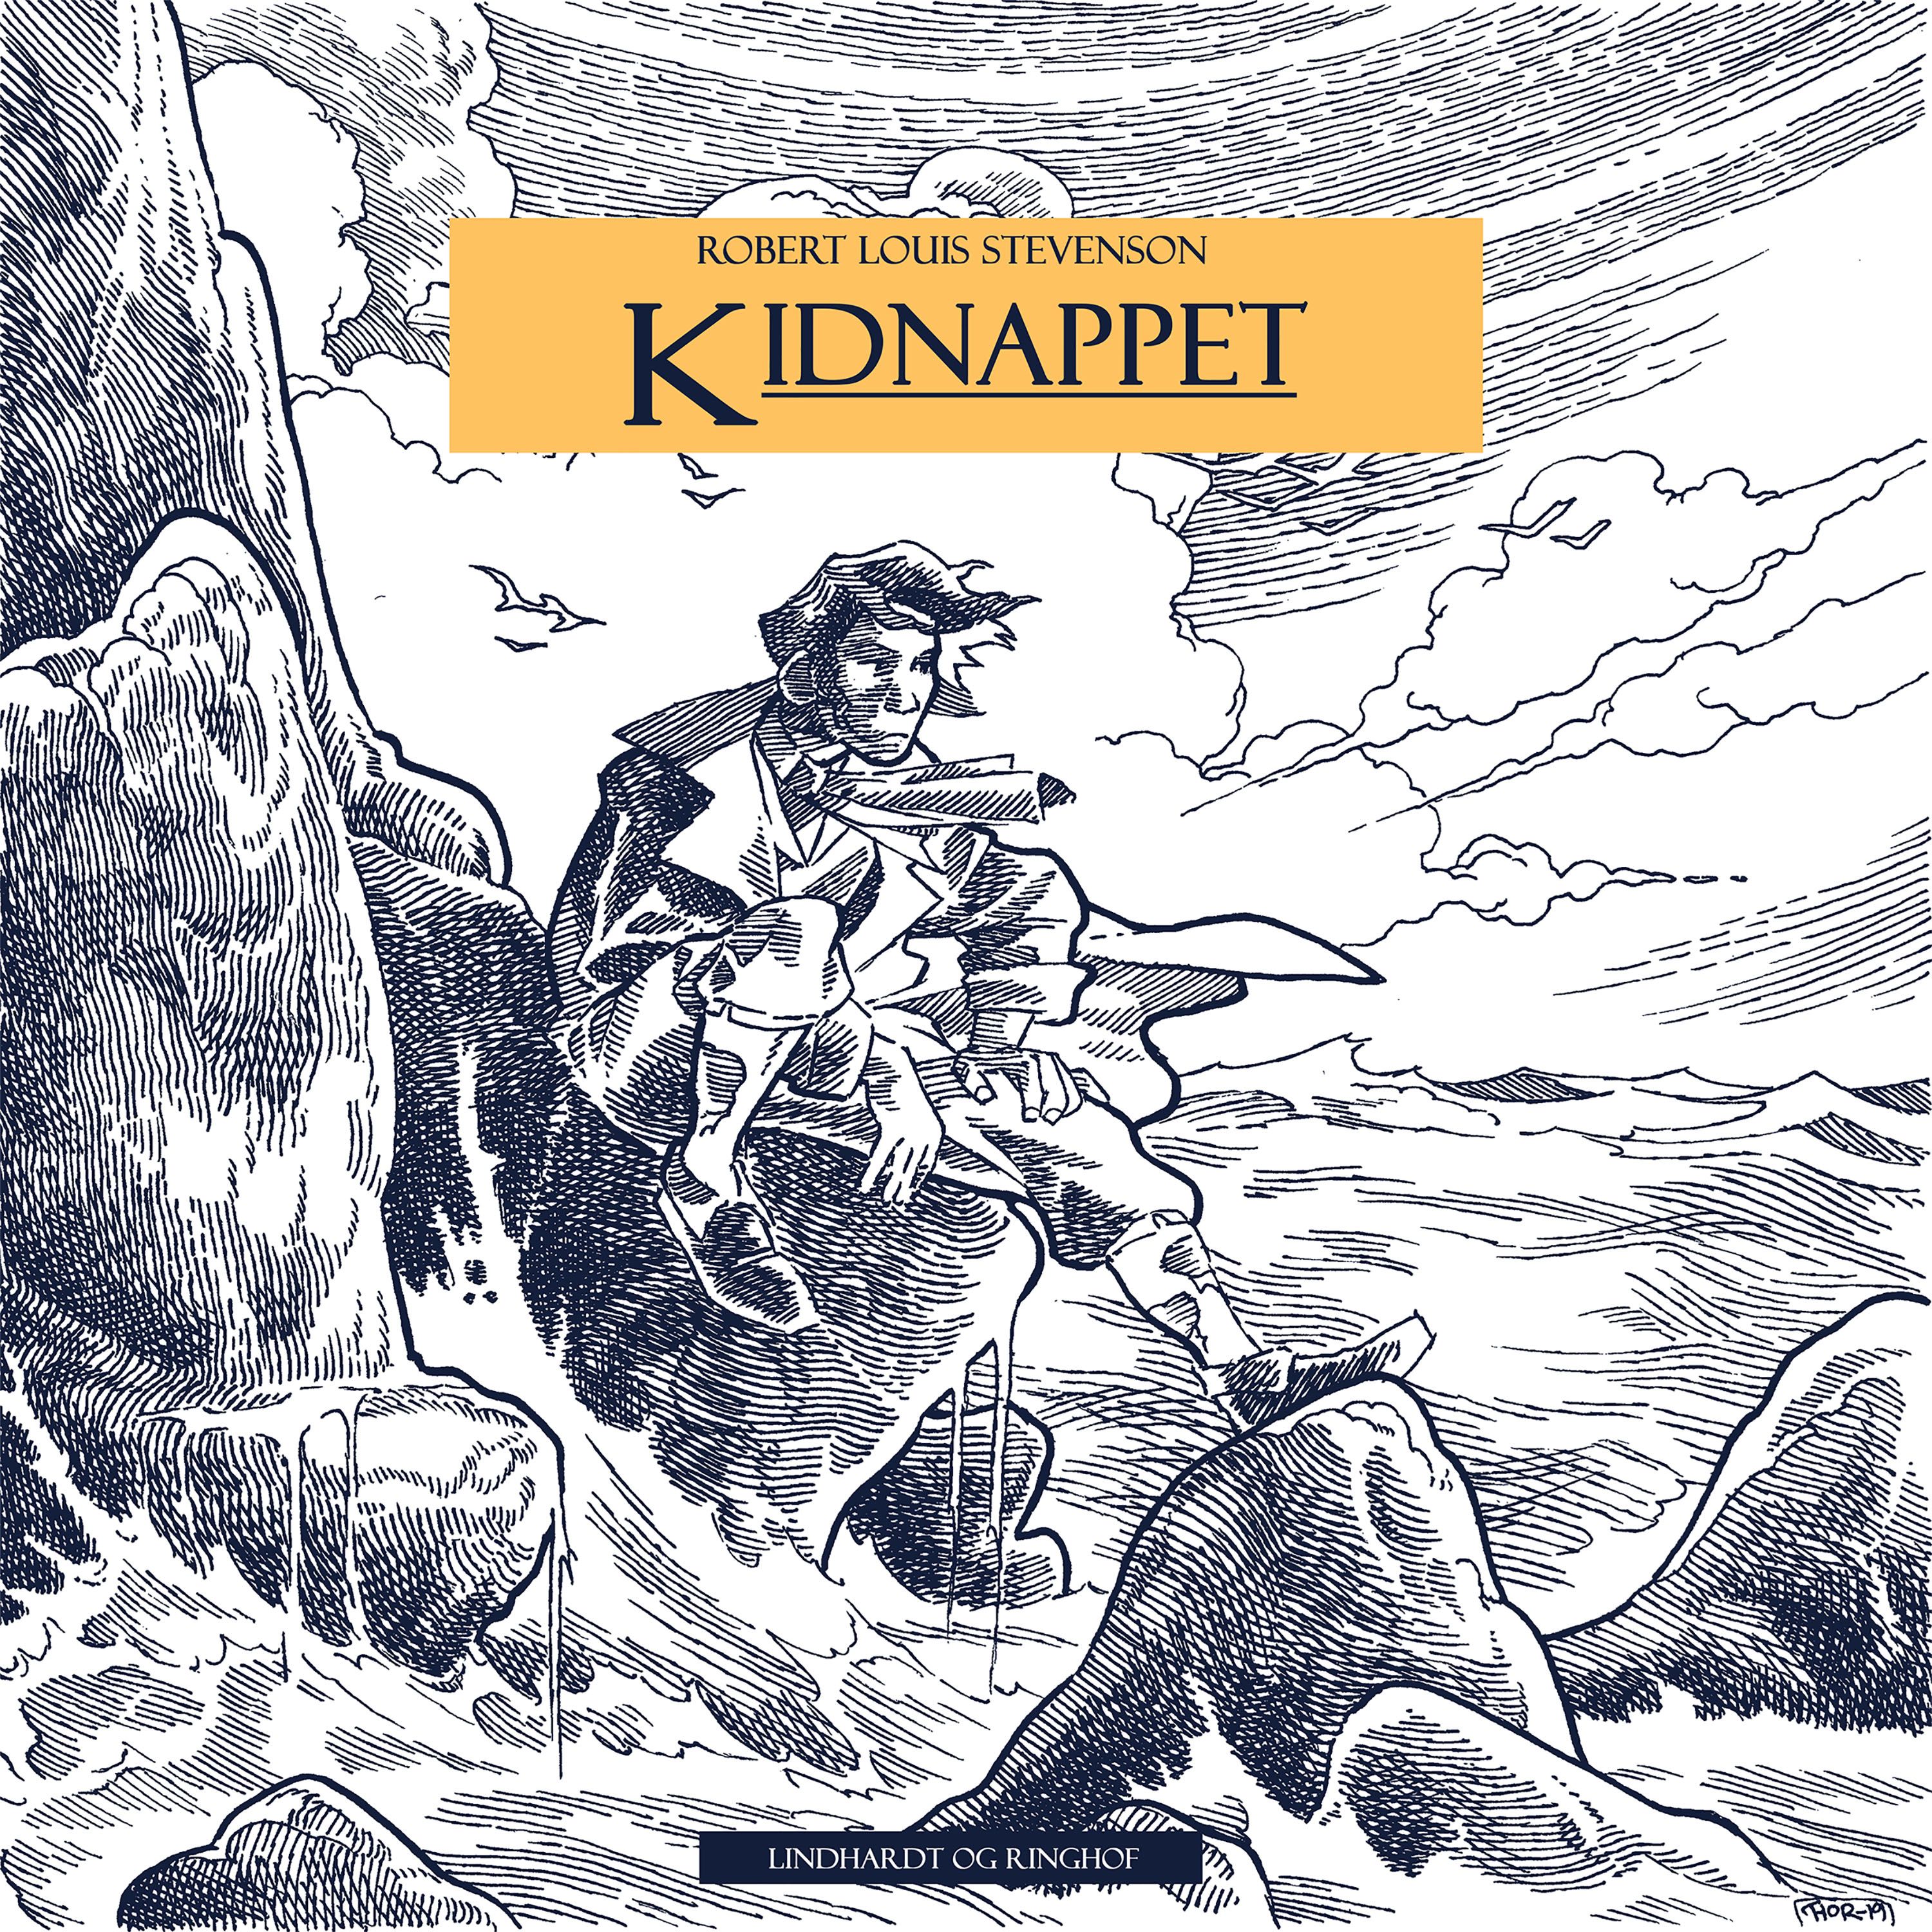 Kidnappet, ljudbok av Robert Louis Stevenson